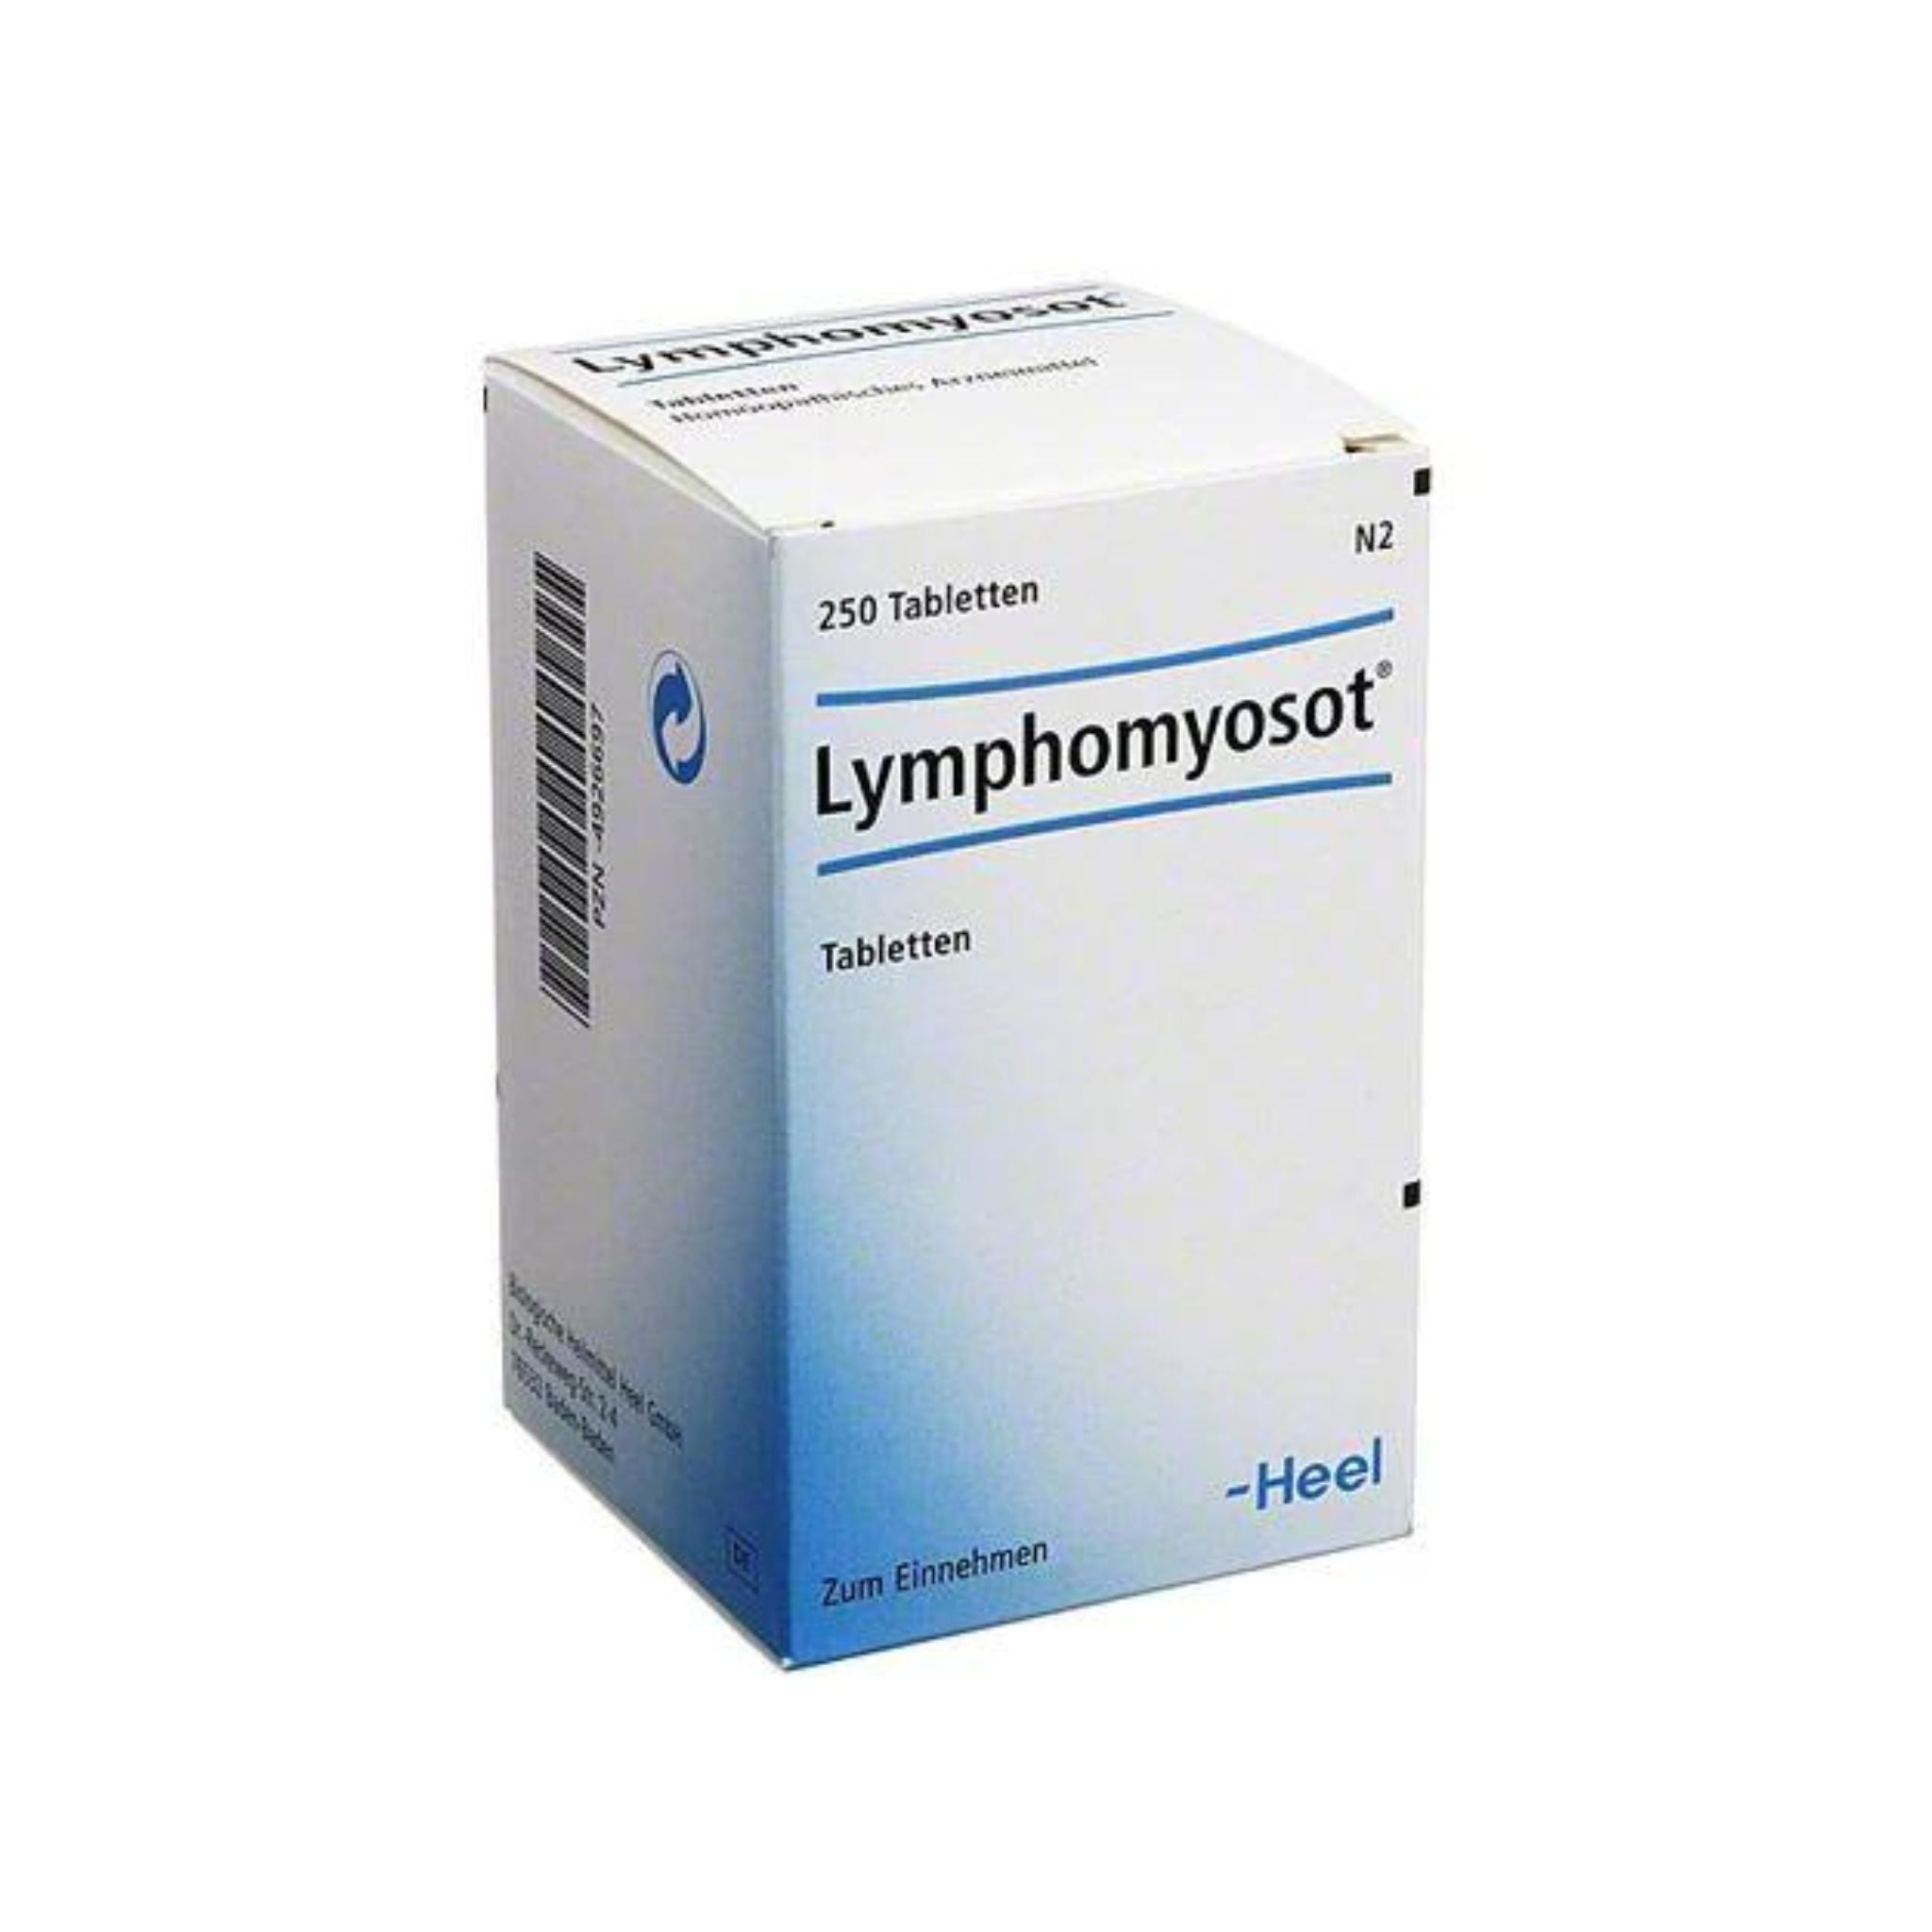 lymphomyosot.jpg